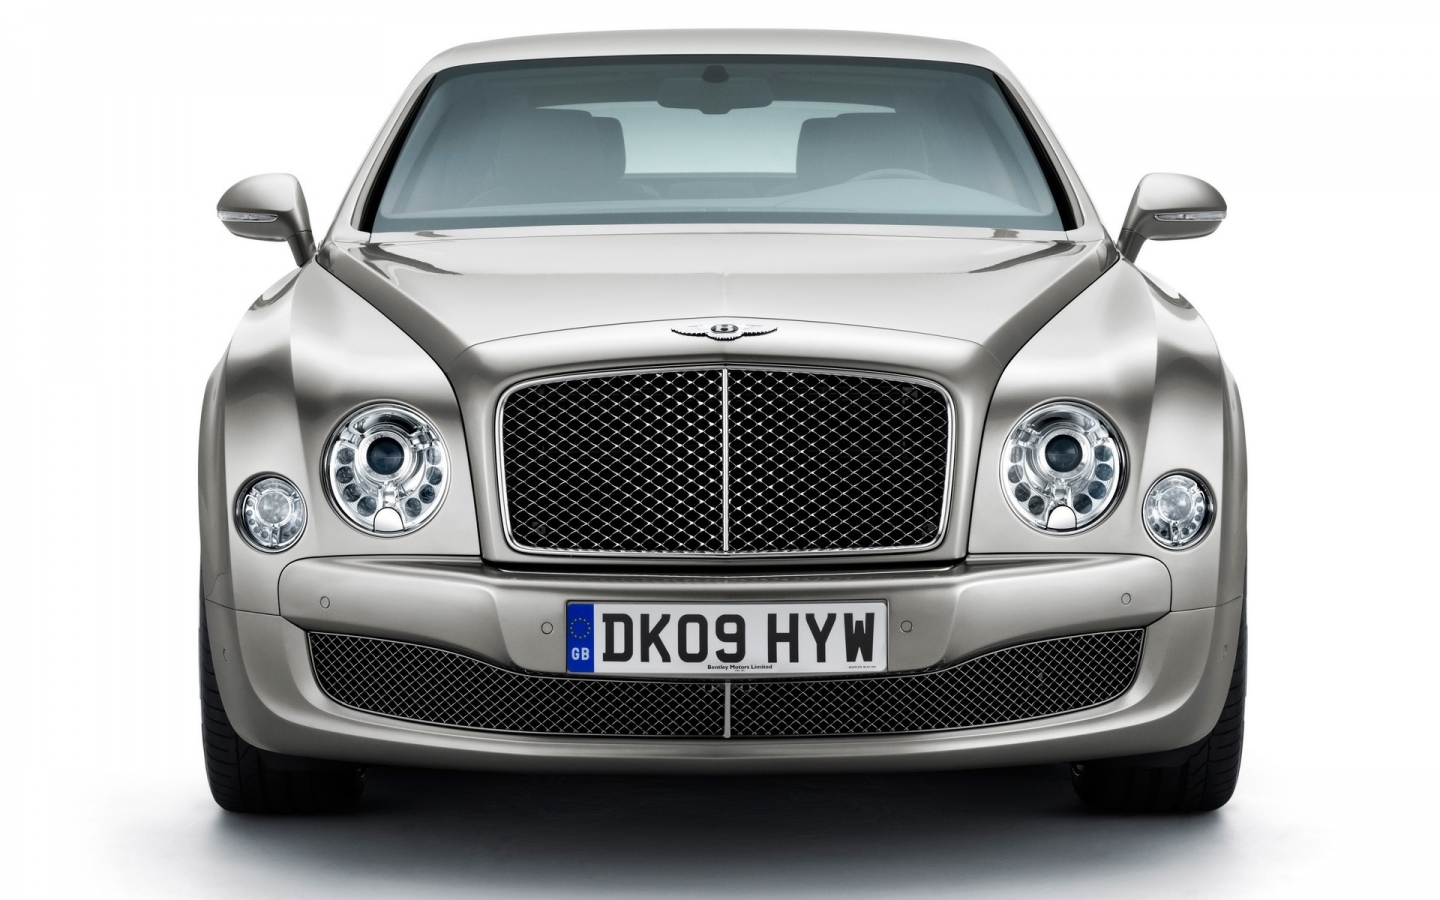 2010 Bentley Mulsanne Front for 1440 x 900 widescreen resolution